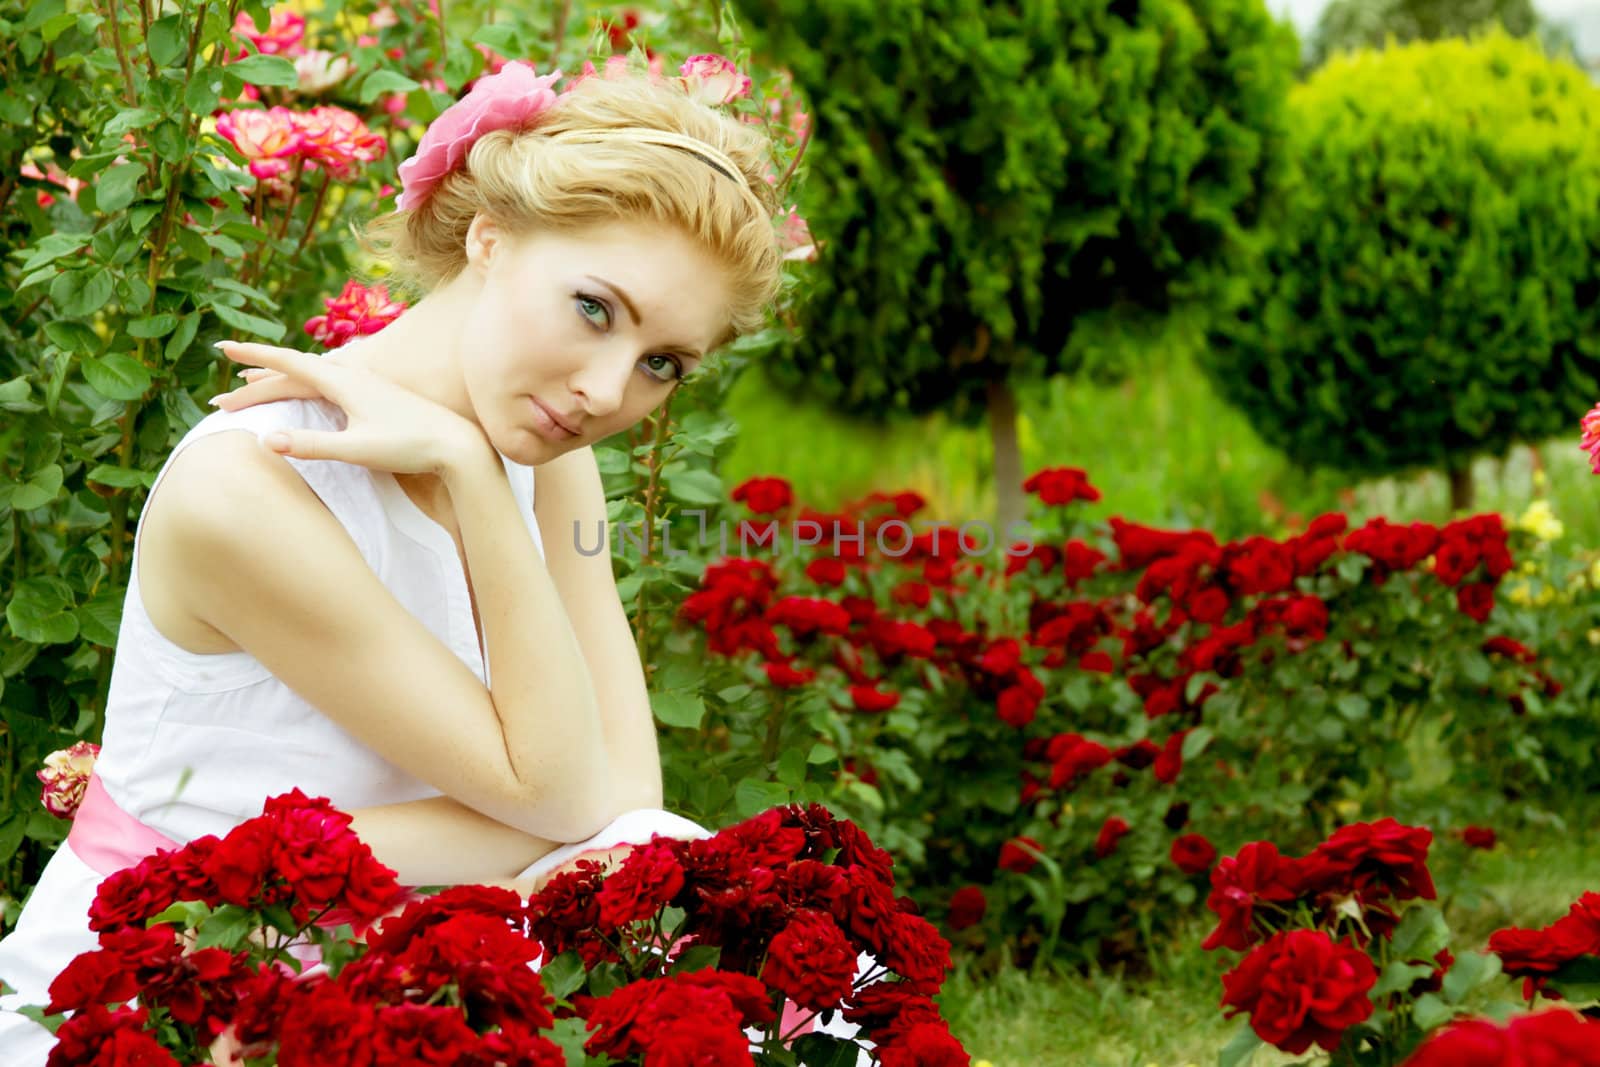 Romantic woman in white dress among rose garden